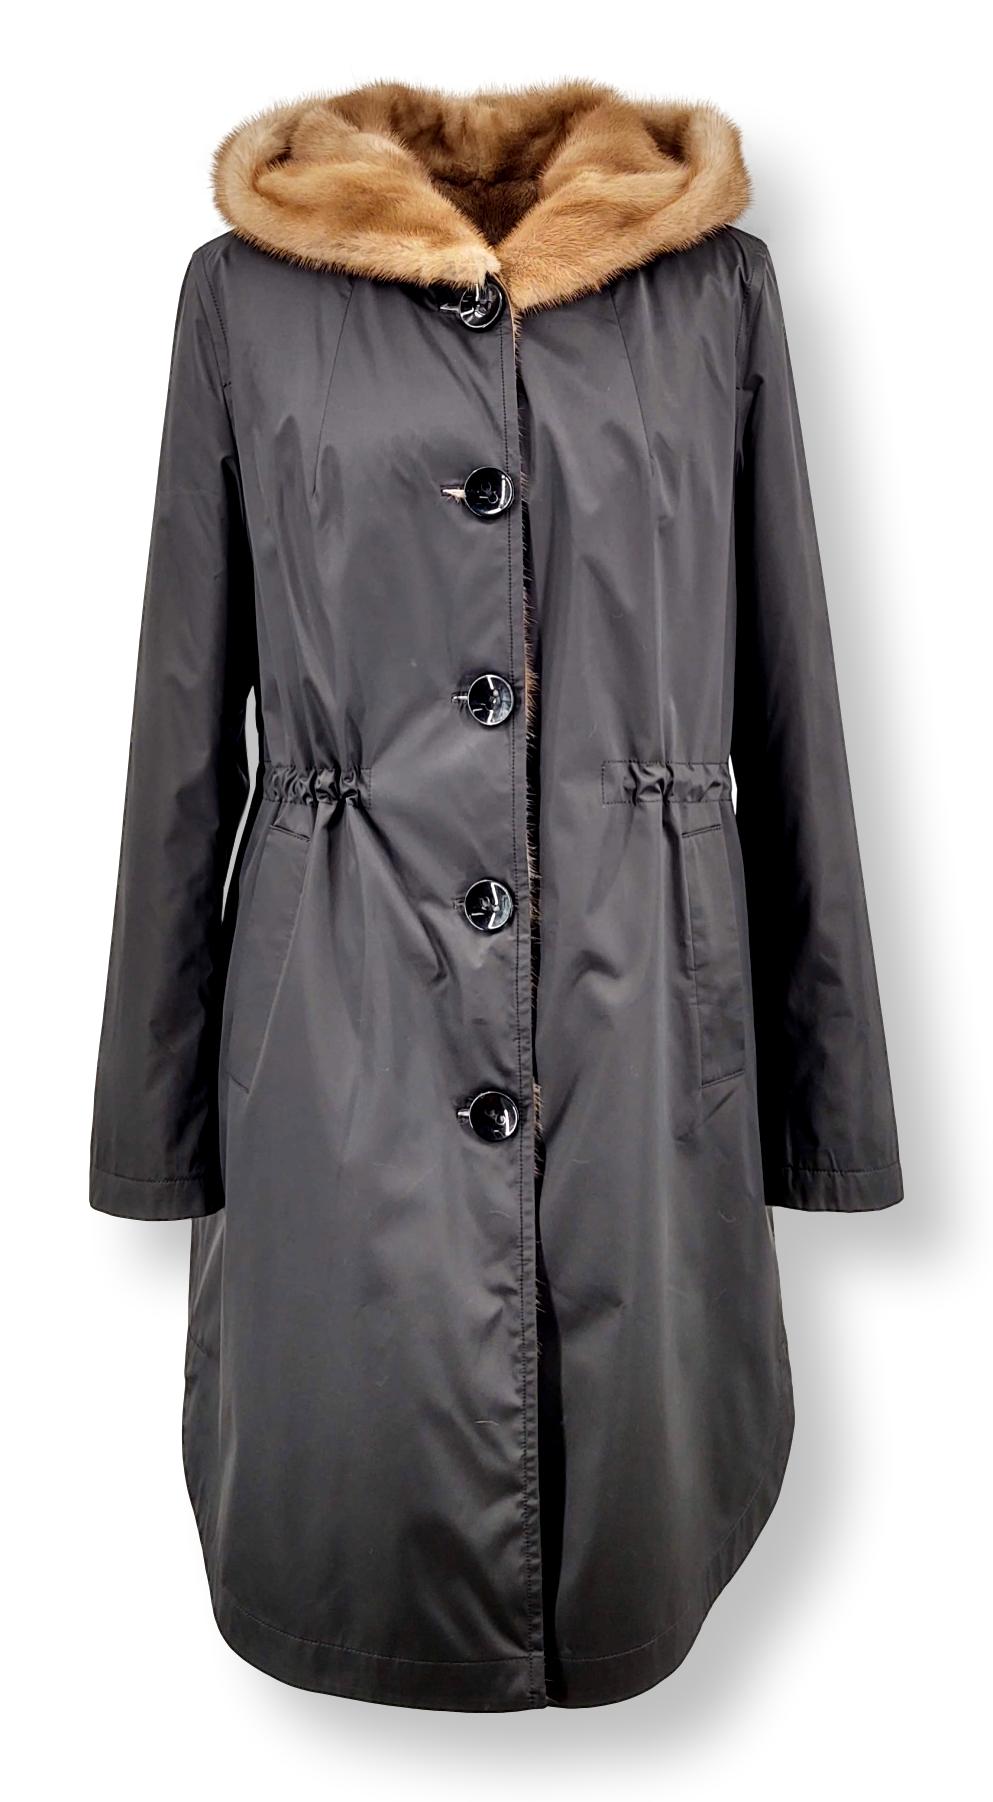 DPW98115-1, 92 cm. - Hood - Textile - Mink - Women - Black